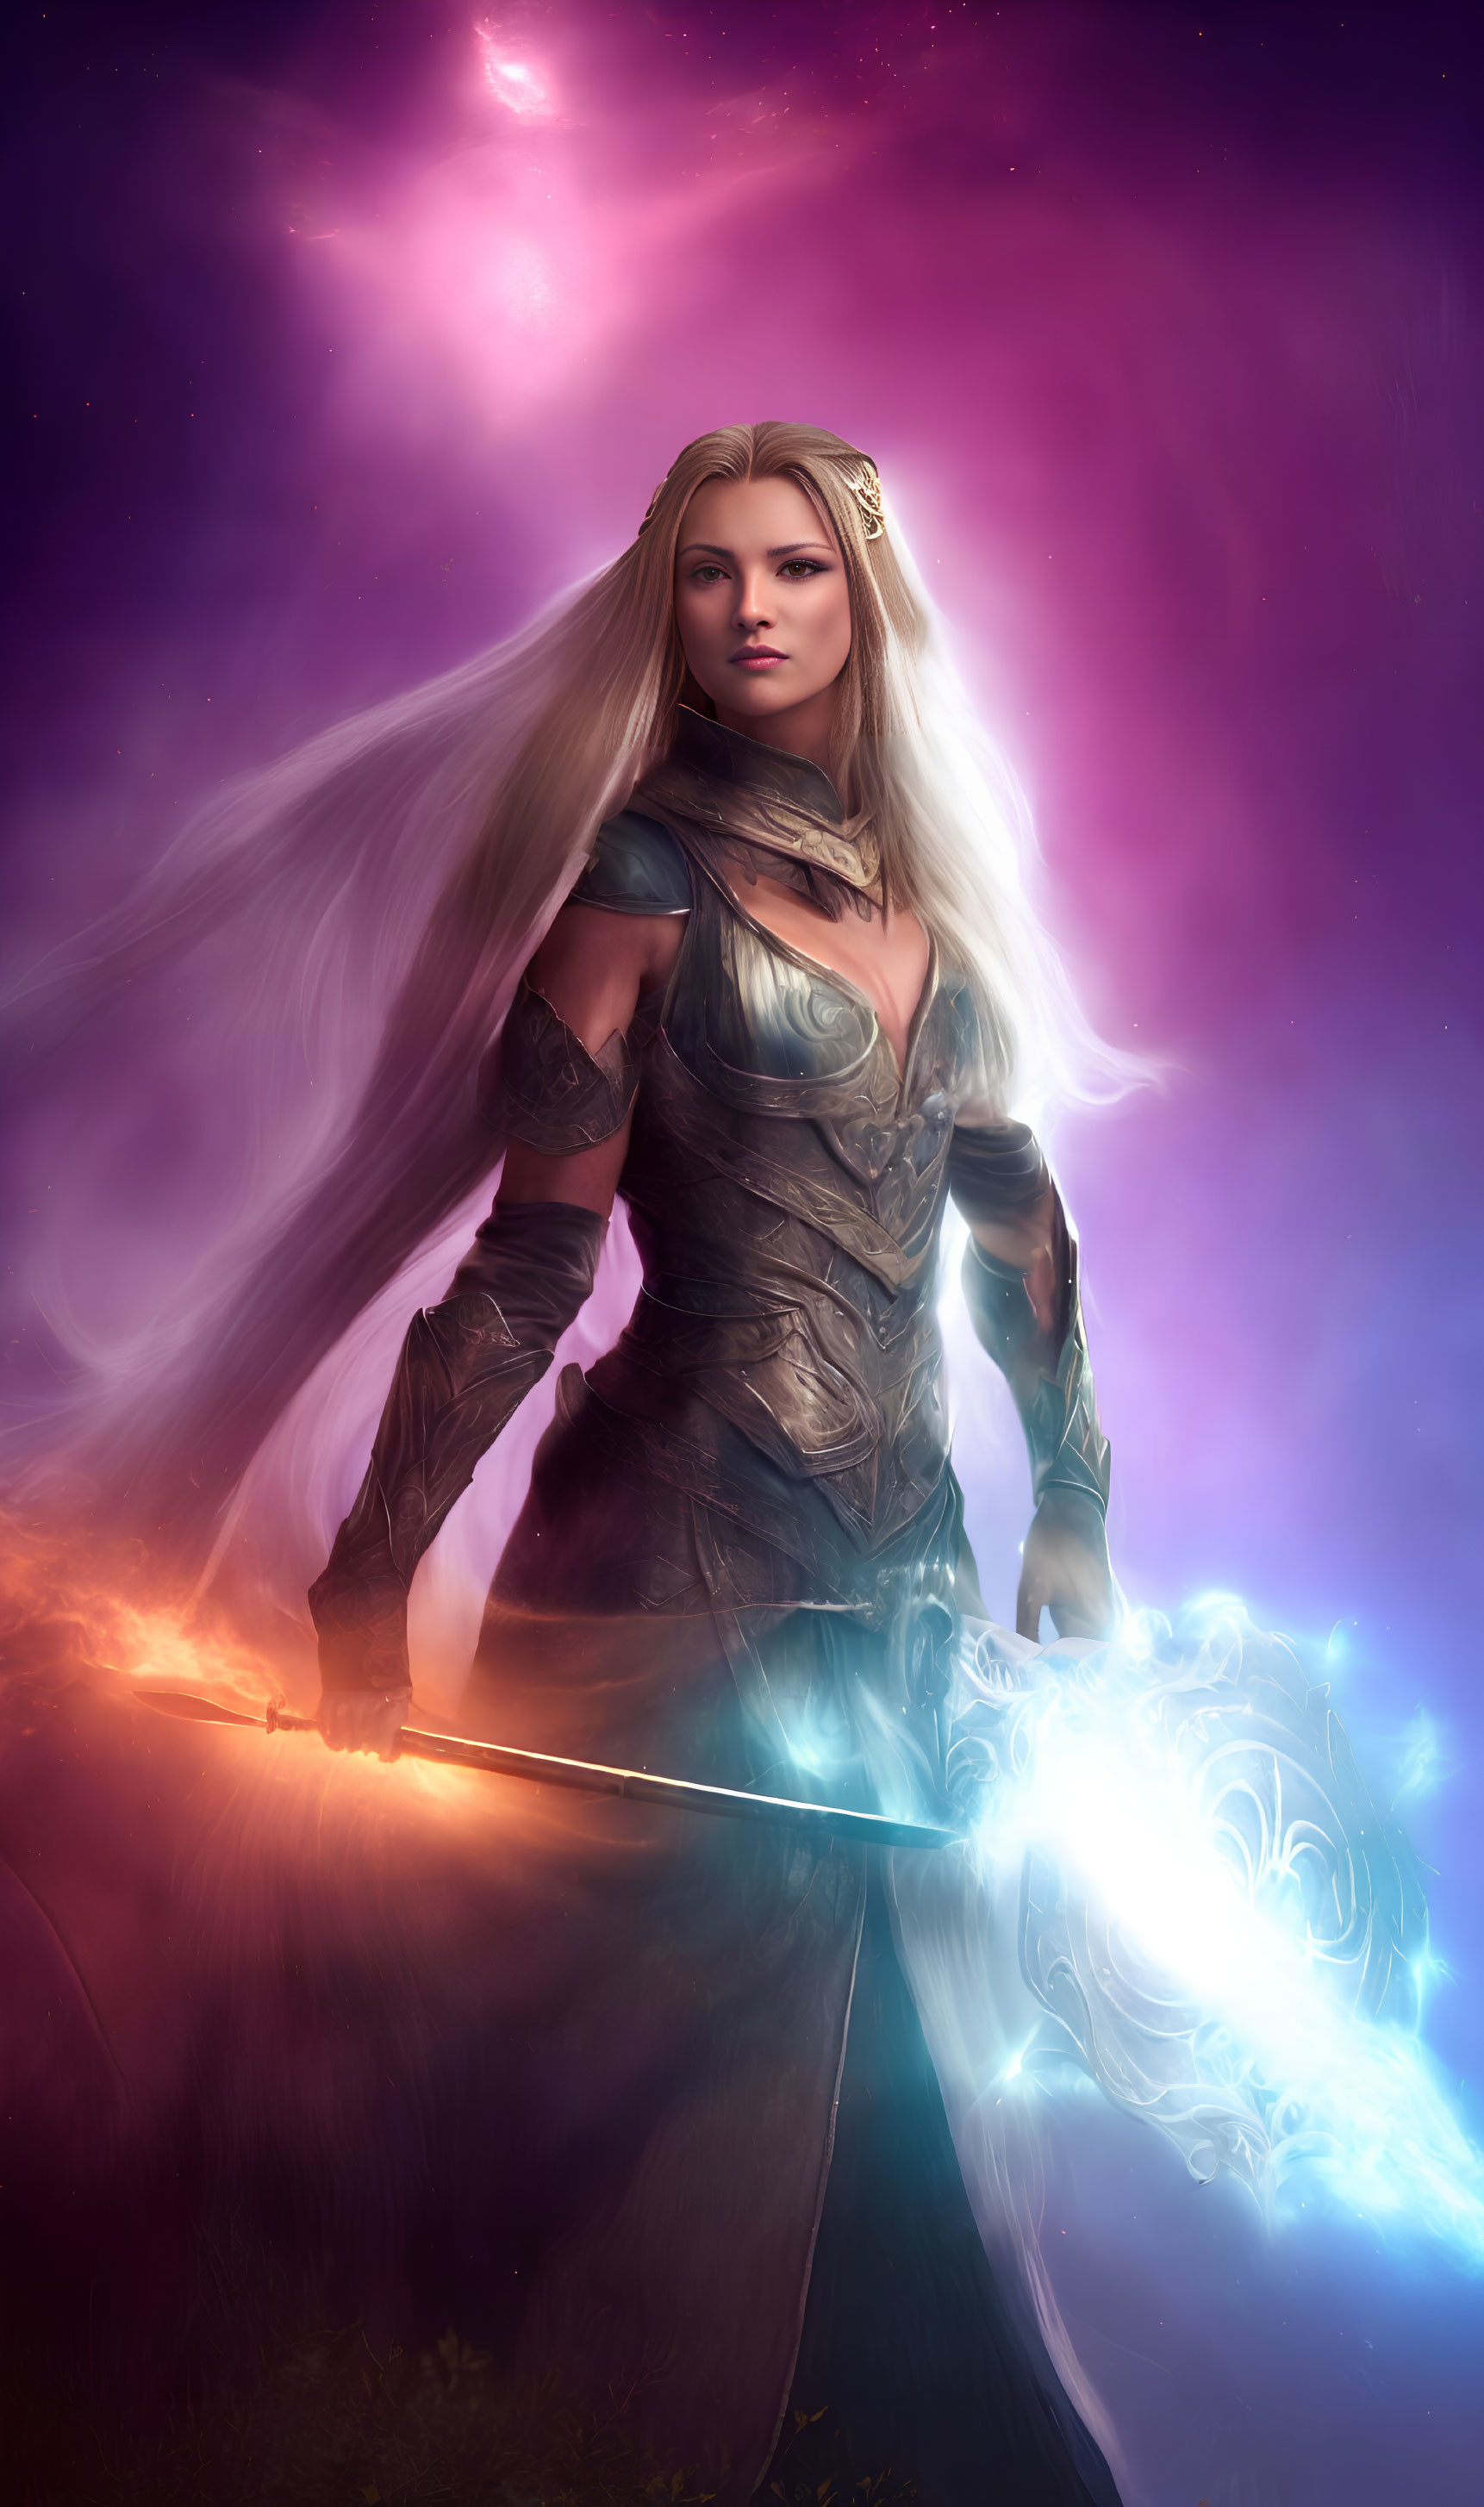 Fantasy warrior woman with glowing blue sword in purple nebula